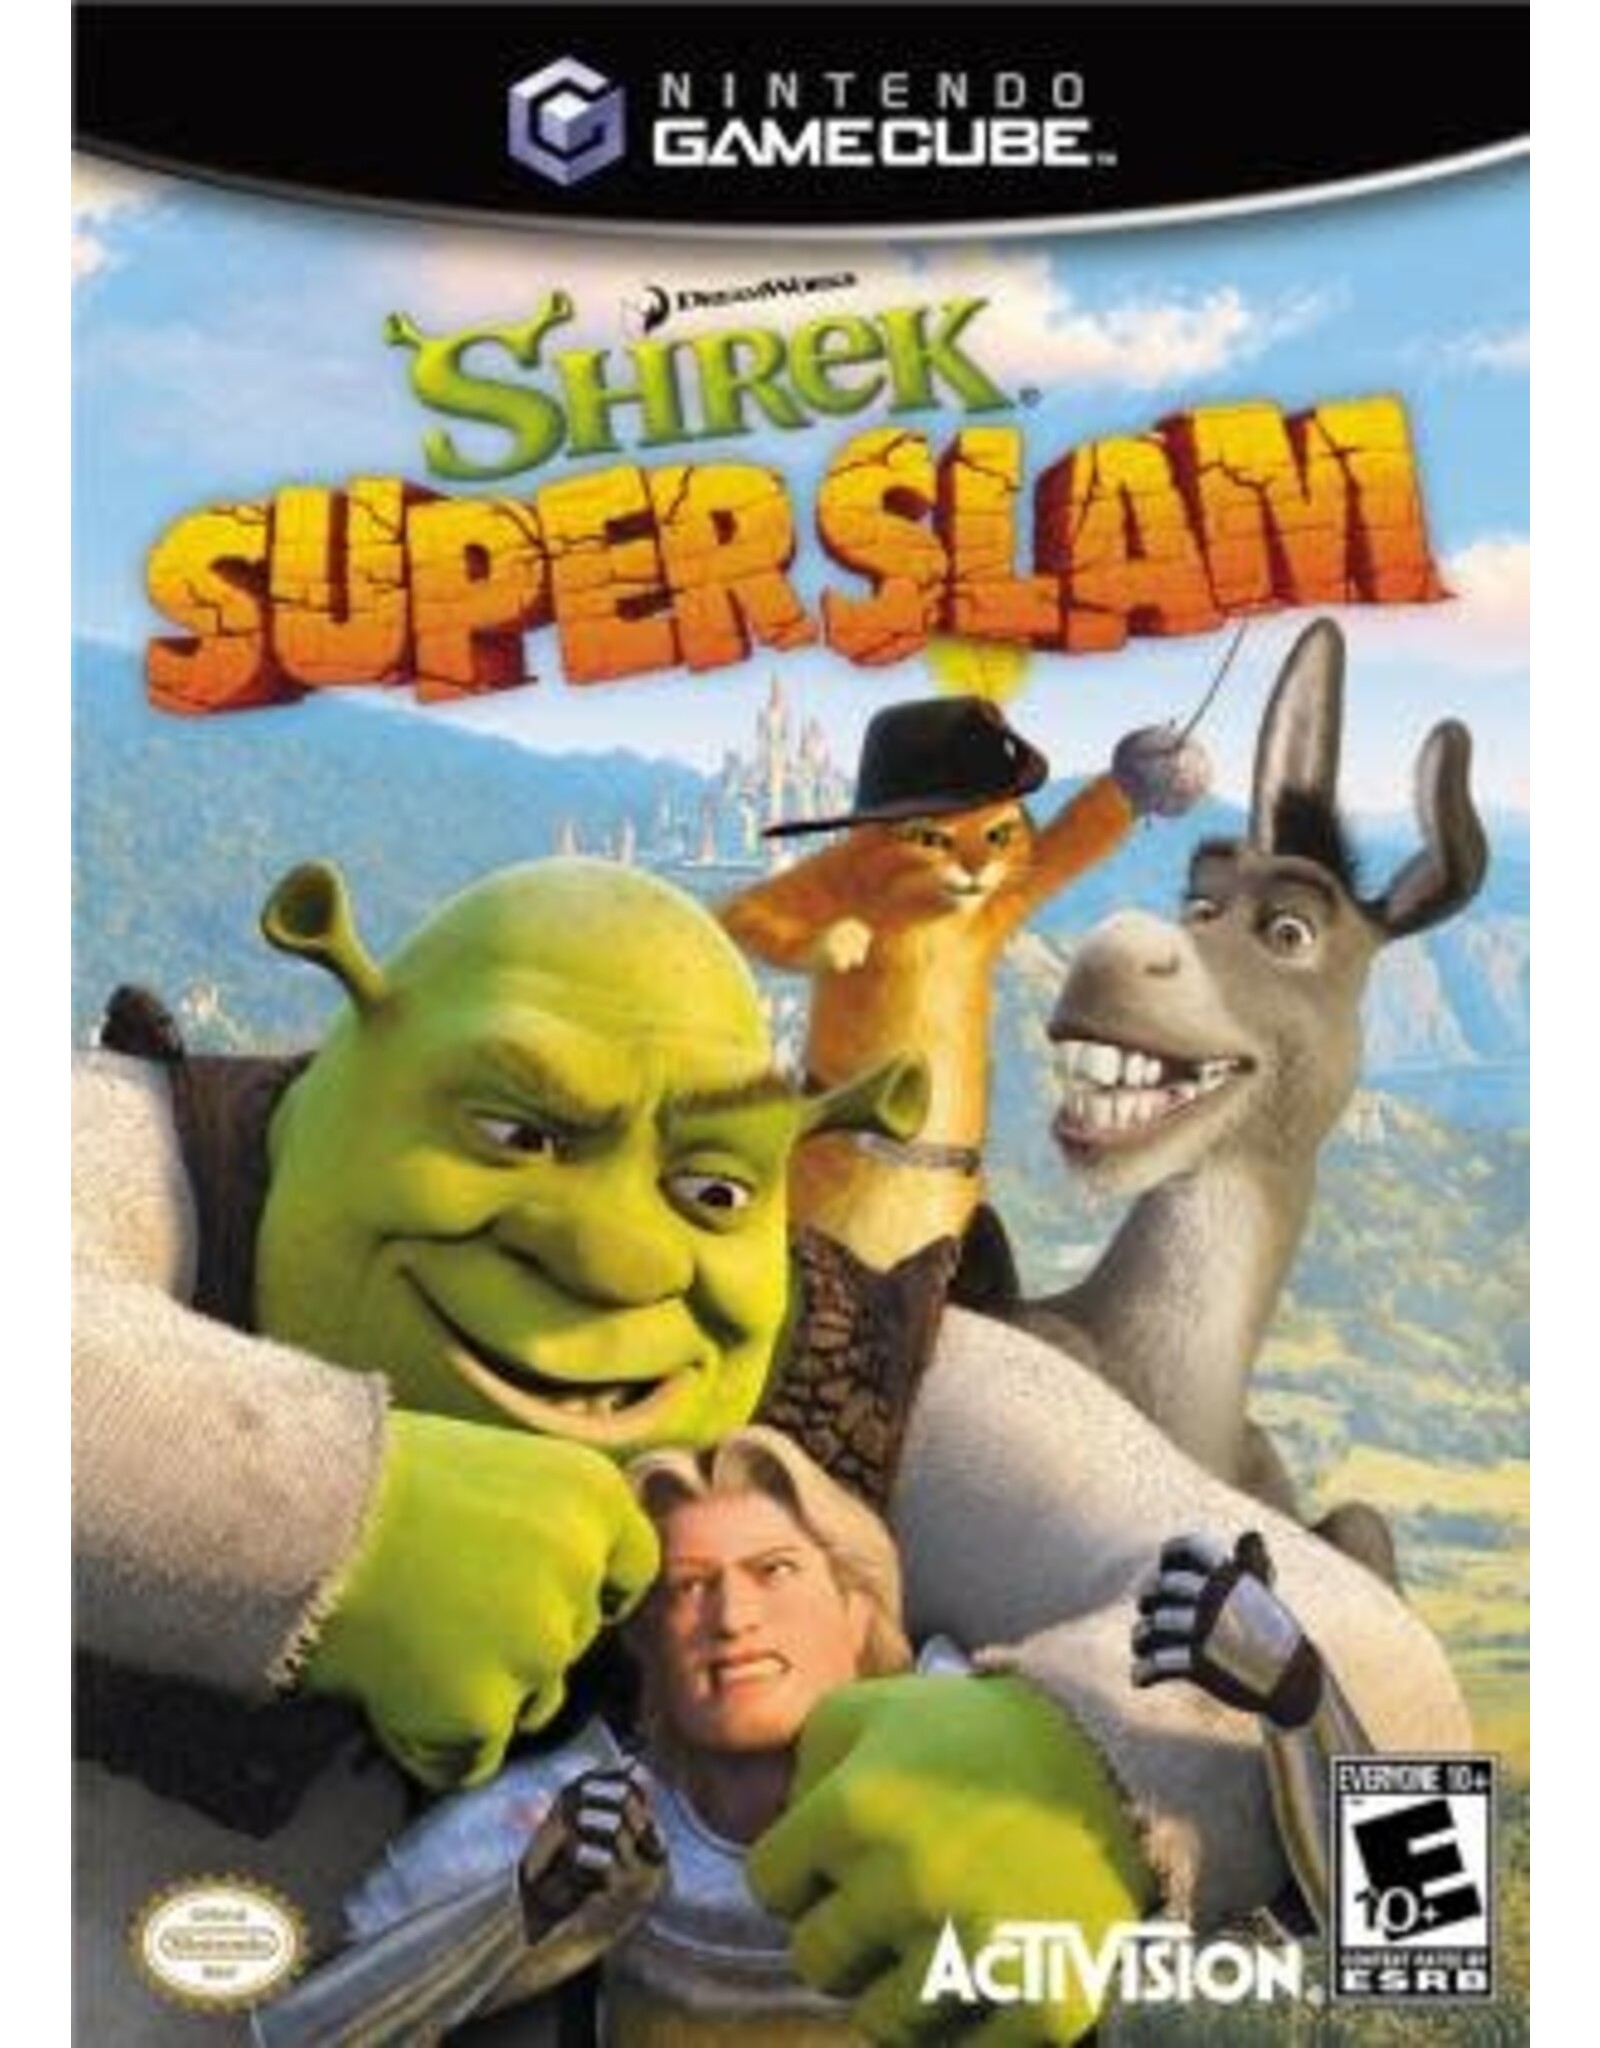 Gamecube Shrek Superslam (CiB)